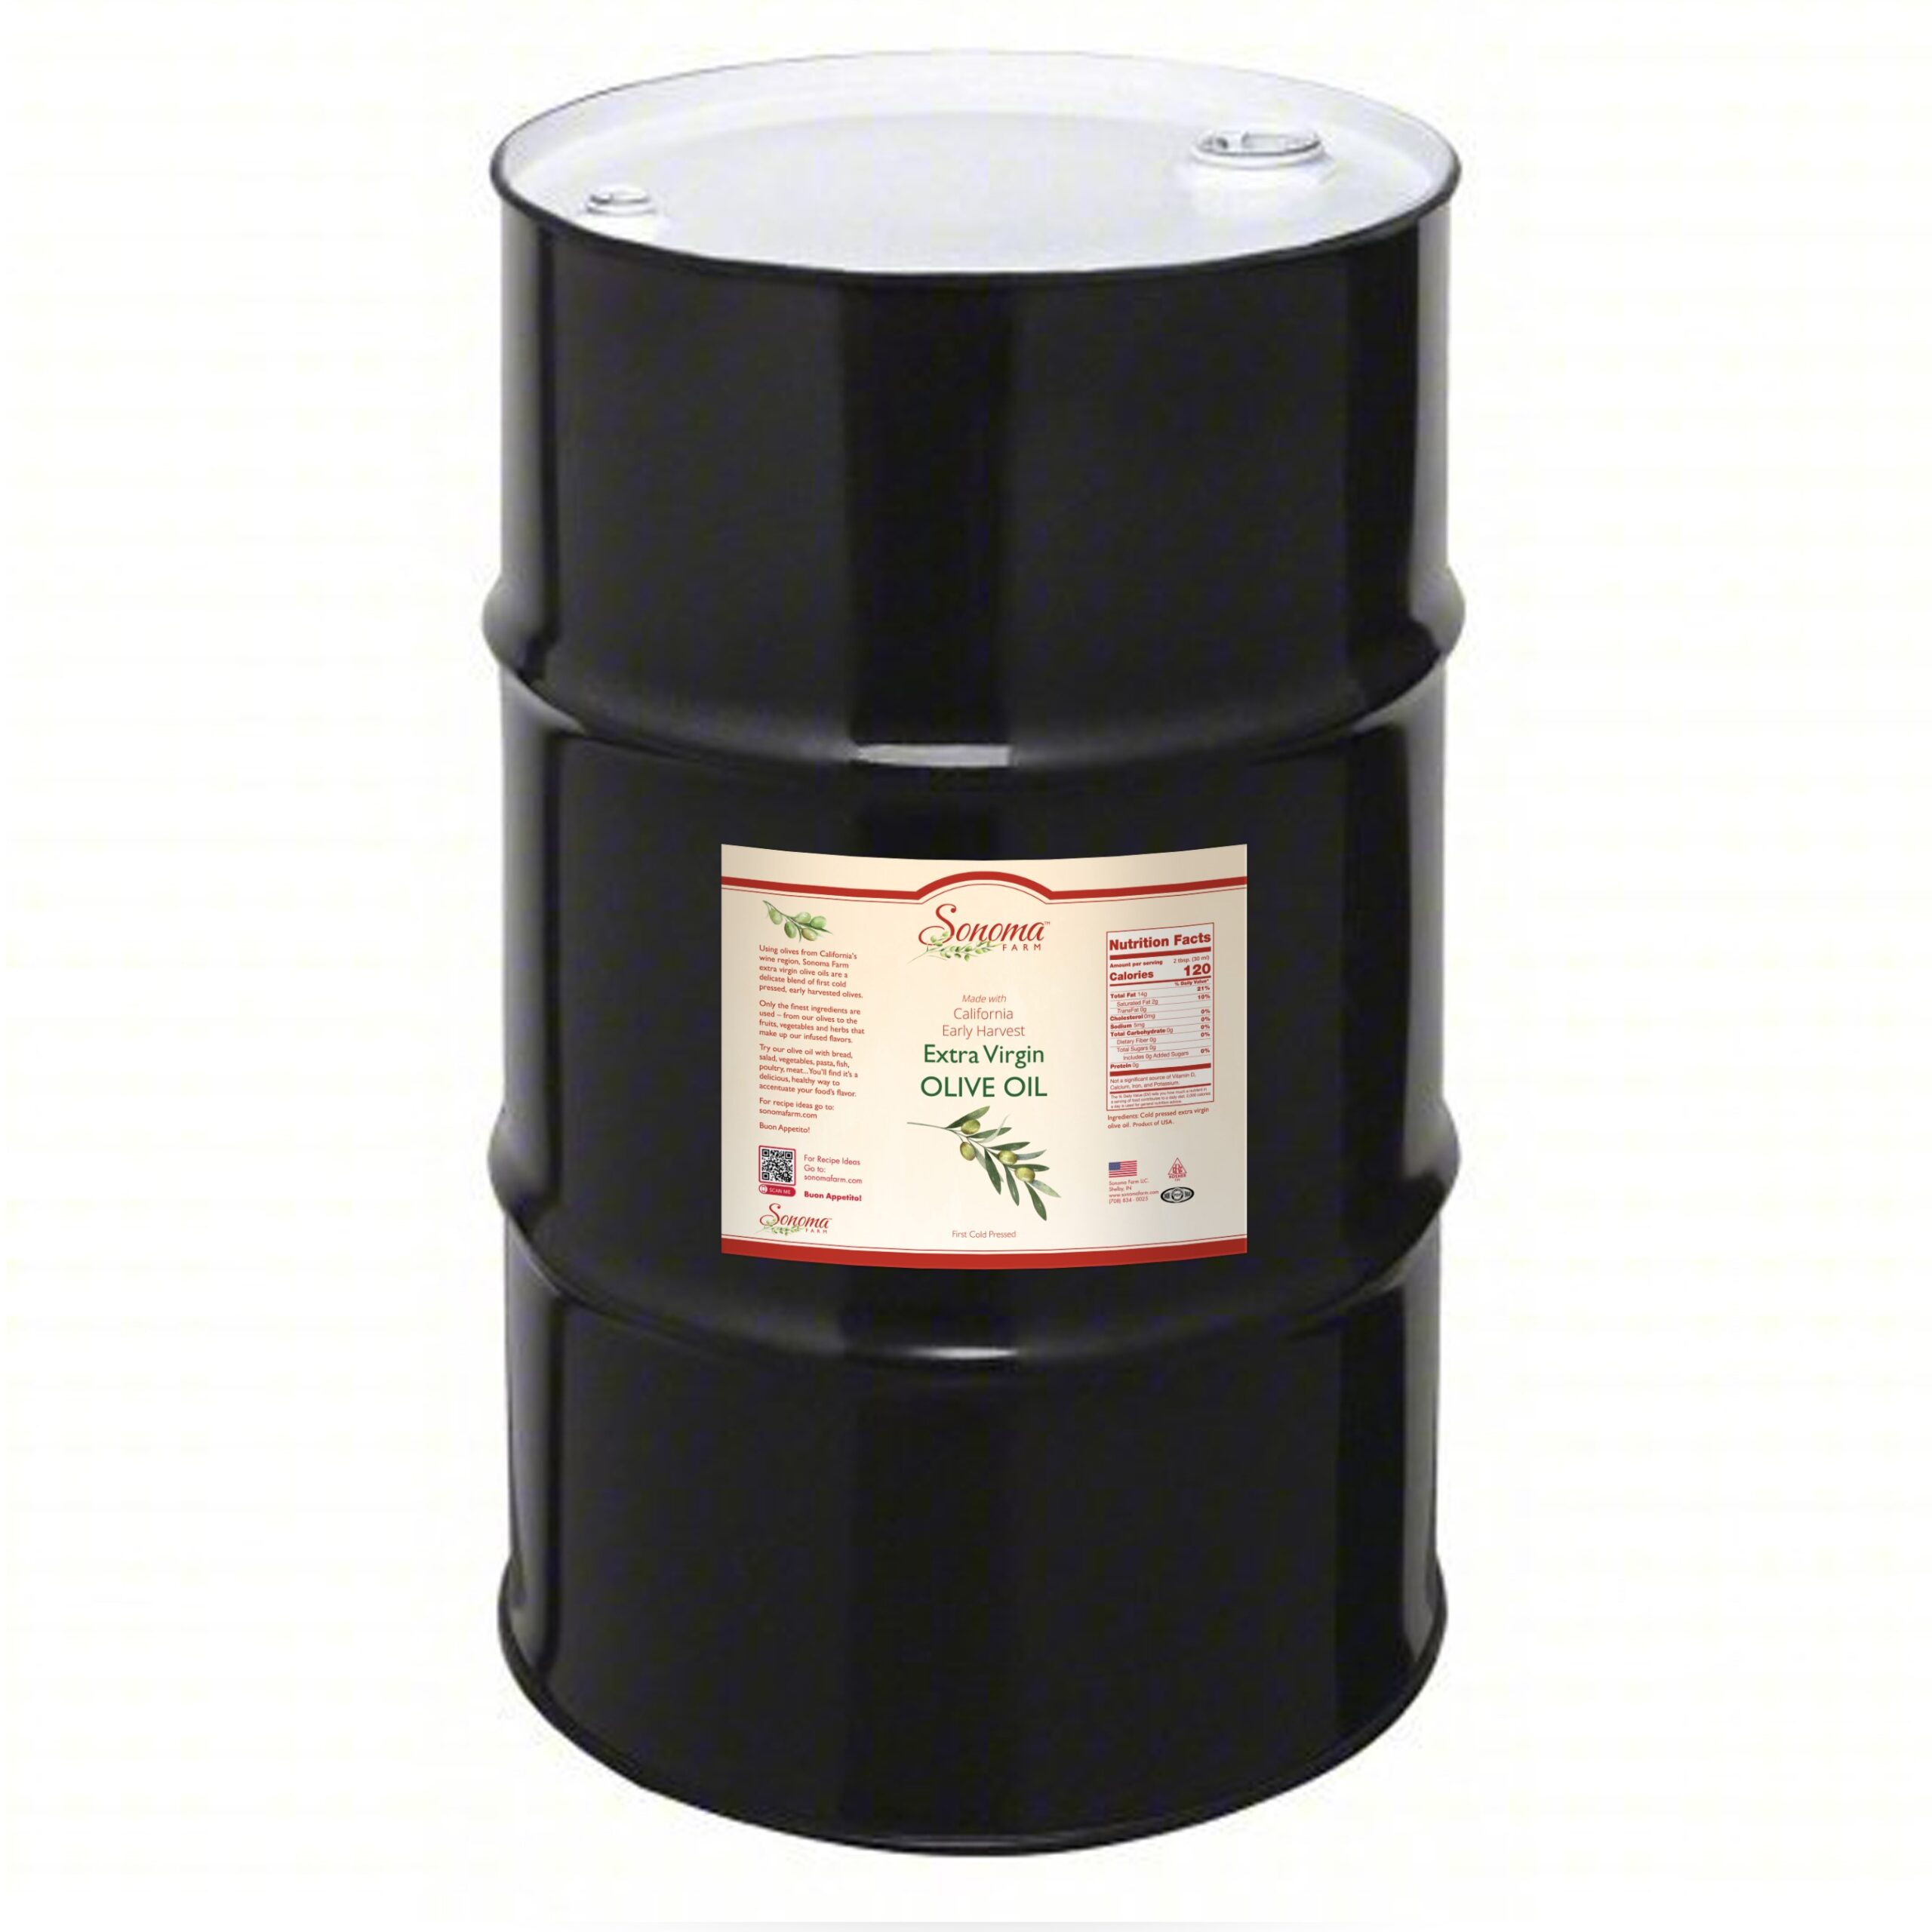 Wholesale Extra Virgin Olive Oil - 440 lb Drum ($3.44 / lb After discount)